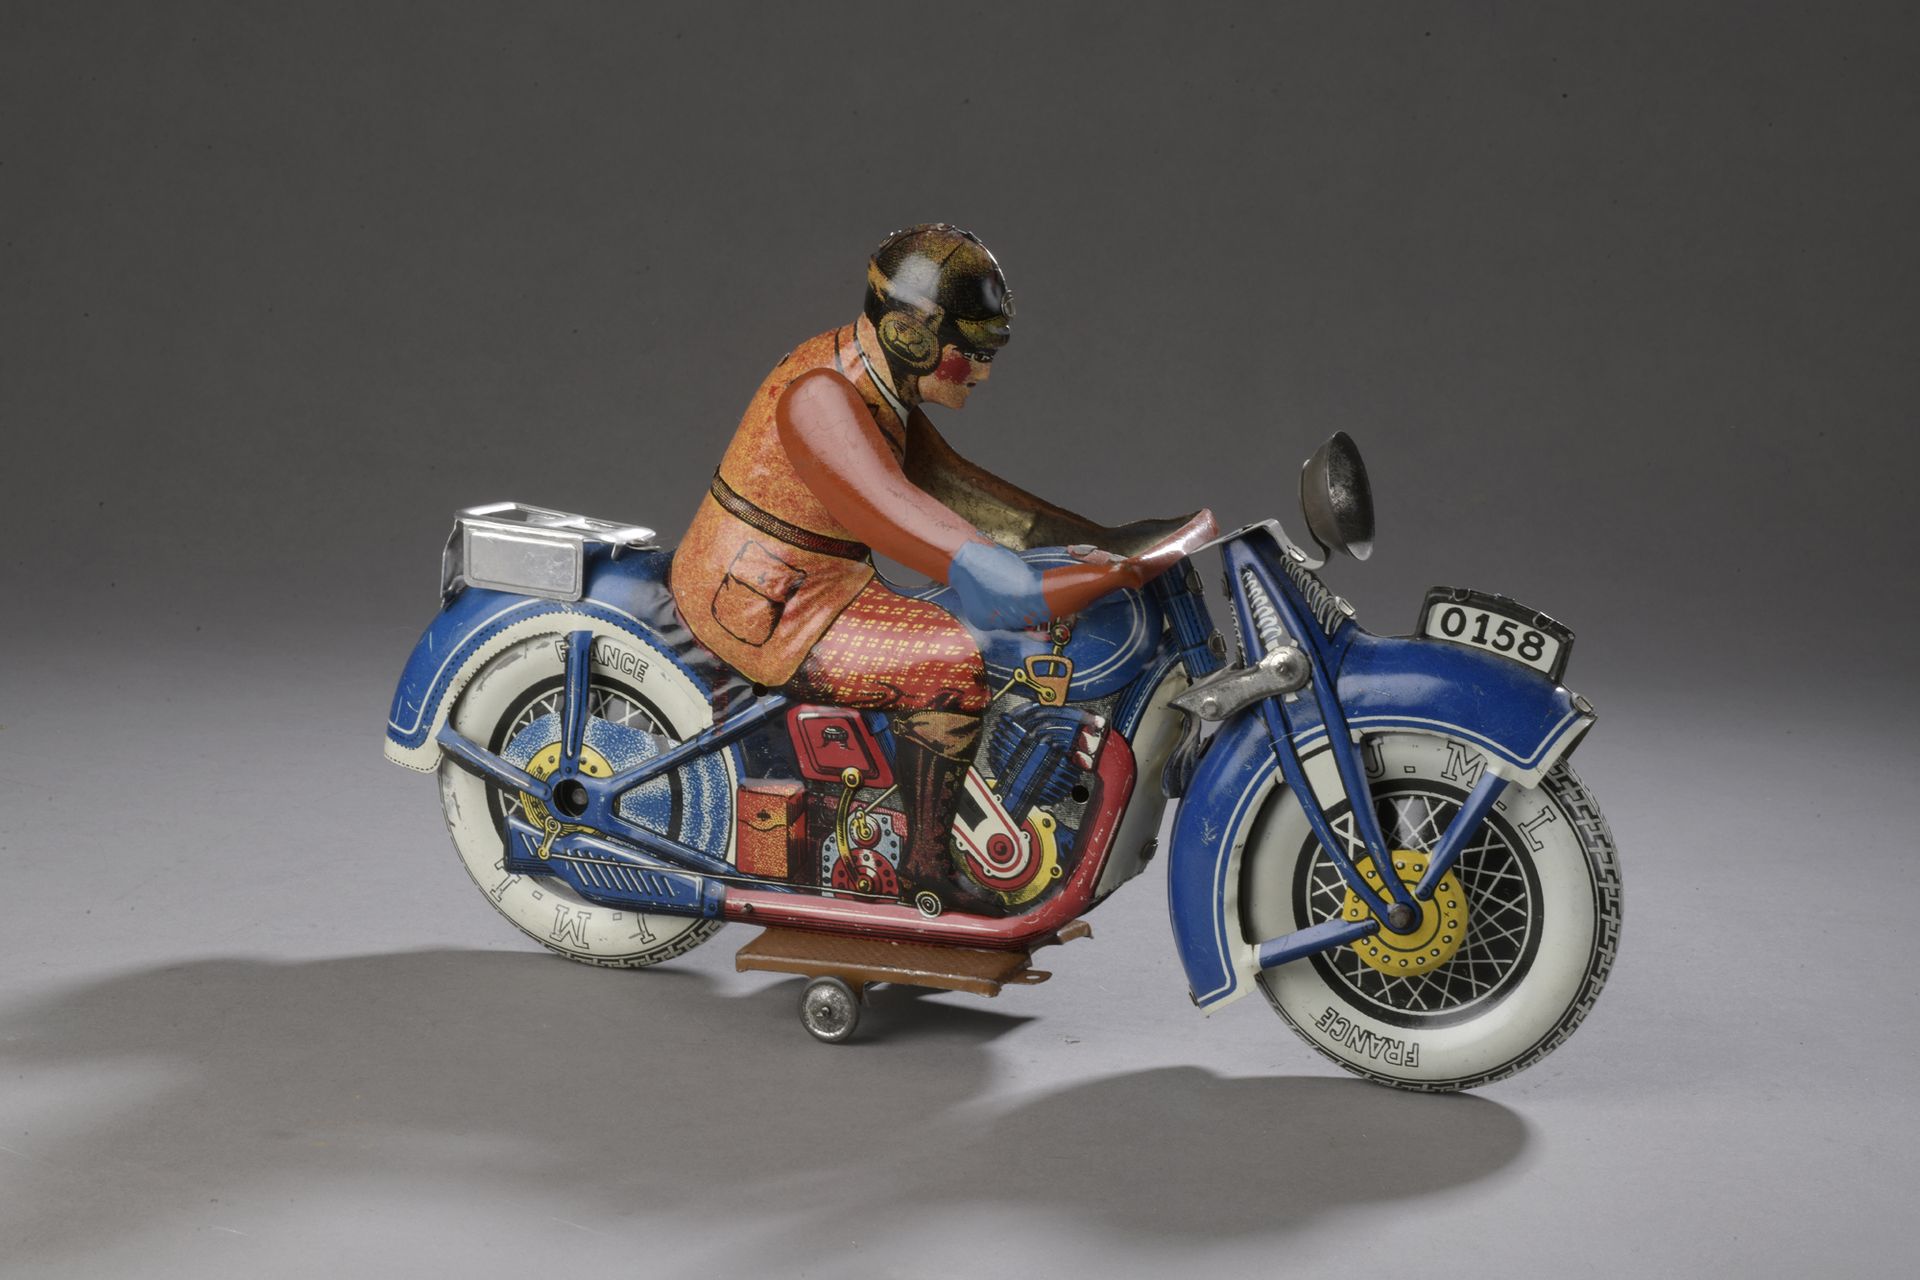 Null JML - 法国, 1936-1960 - 蓝色石印金属板摩托车，有摩托车手，编号0158，无头灯，轮胎为JML法国。

L. 30 cm